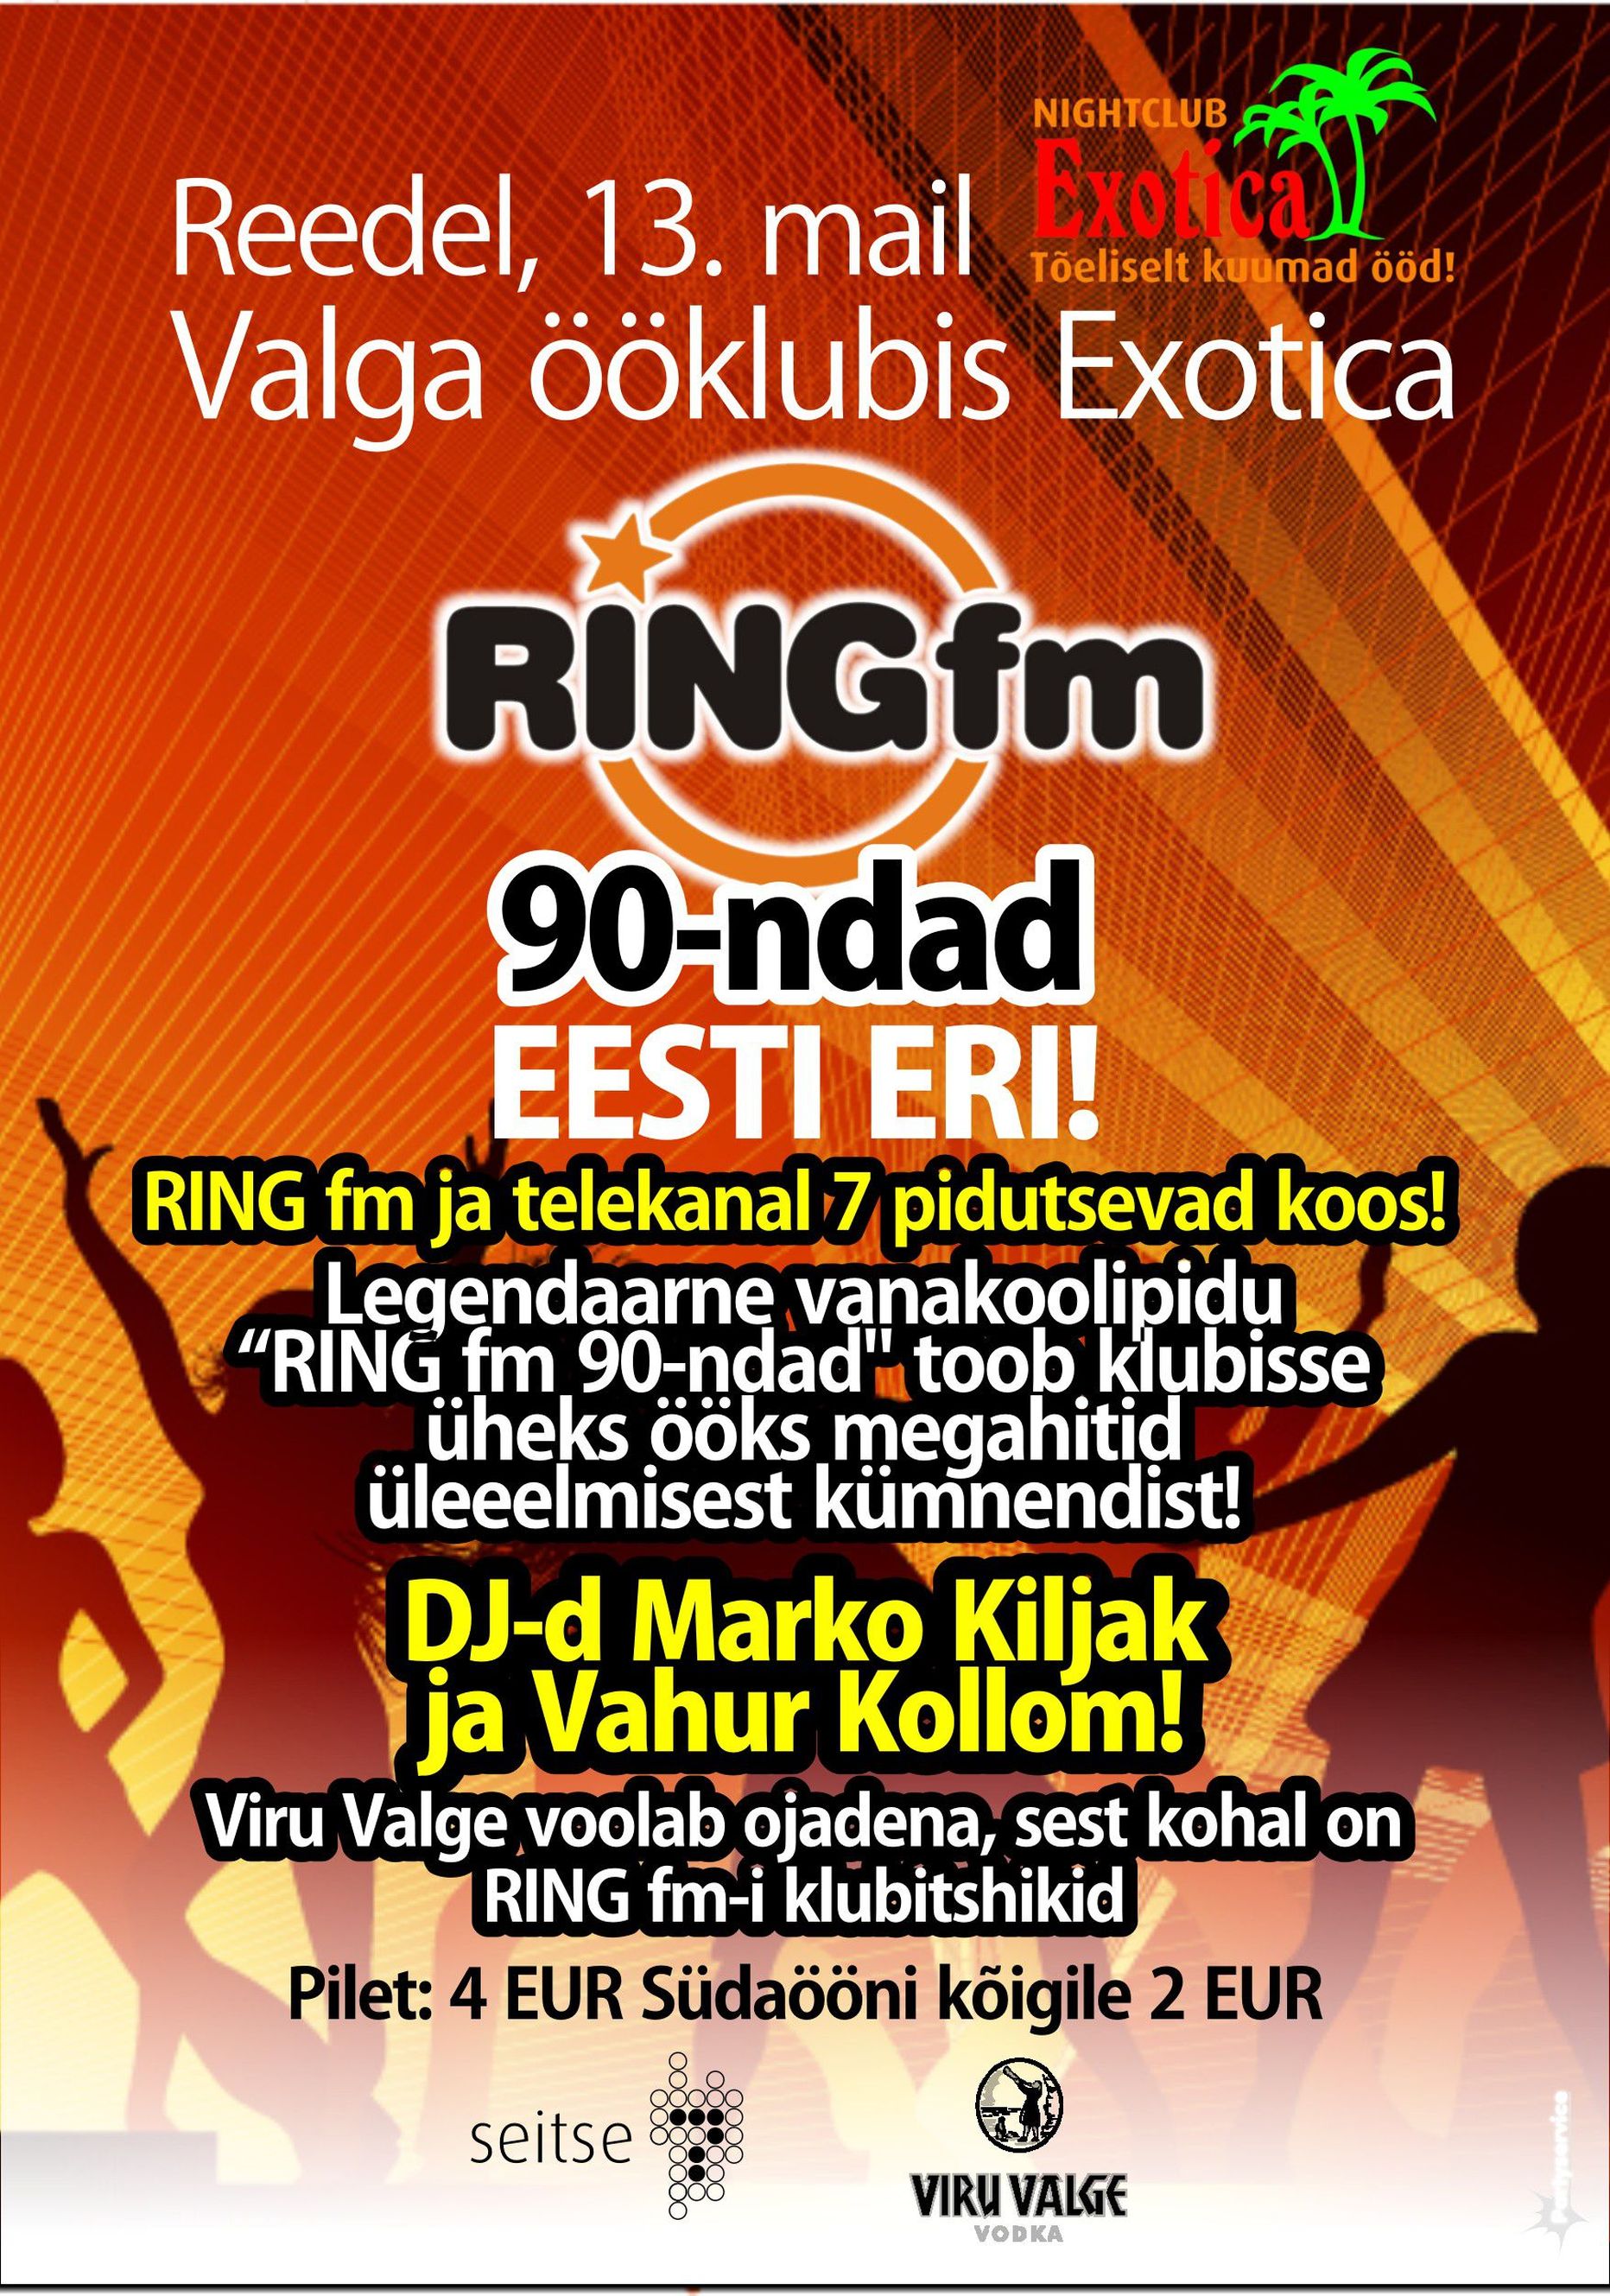 Ring FMi 90ndad reedel Valga ööklubis Exotica!